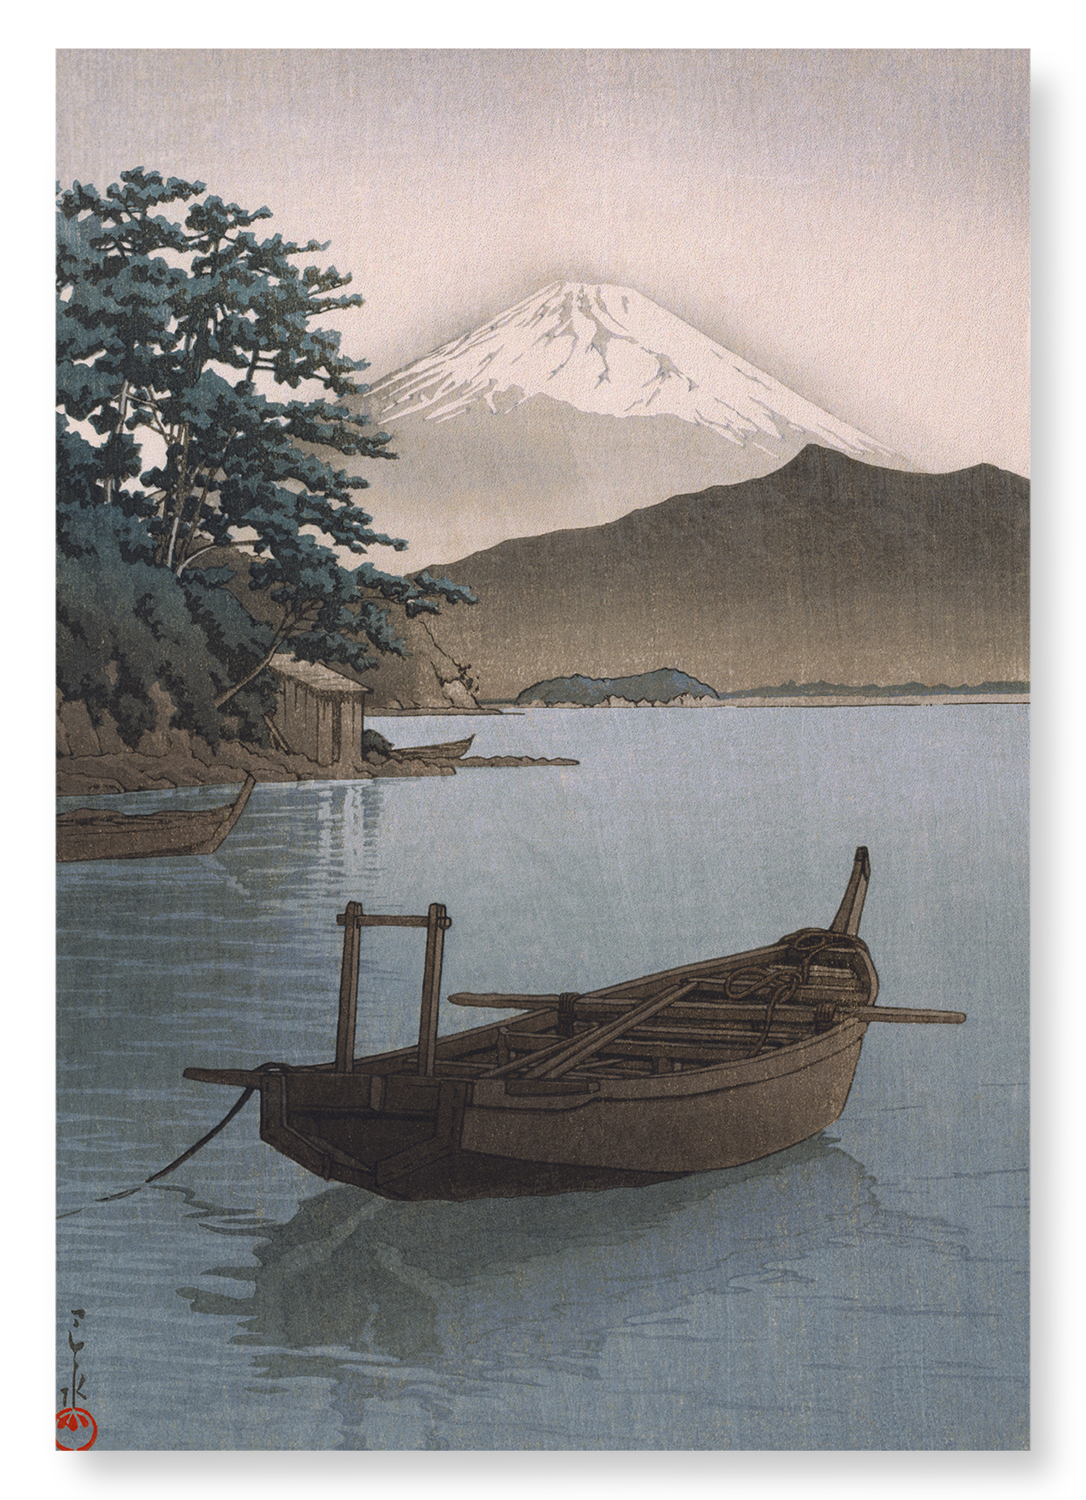 MOUNT FUJI AND BOAT: Japanese Art Print